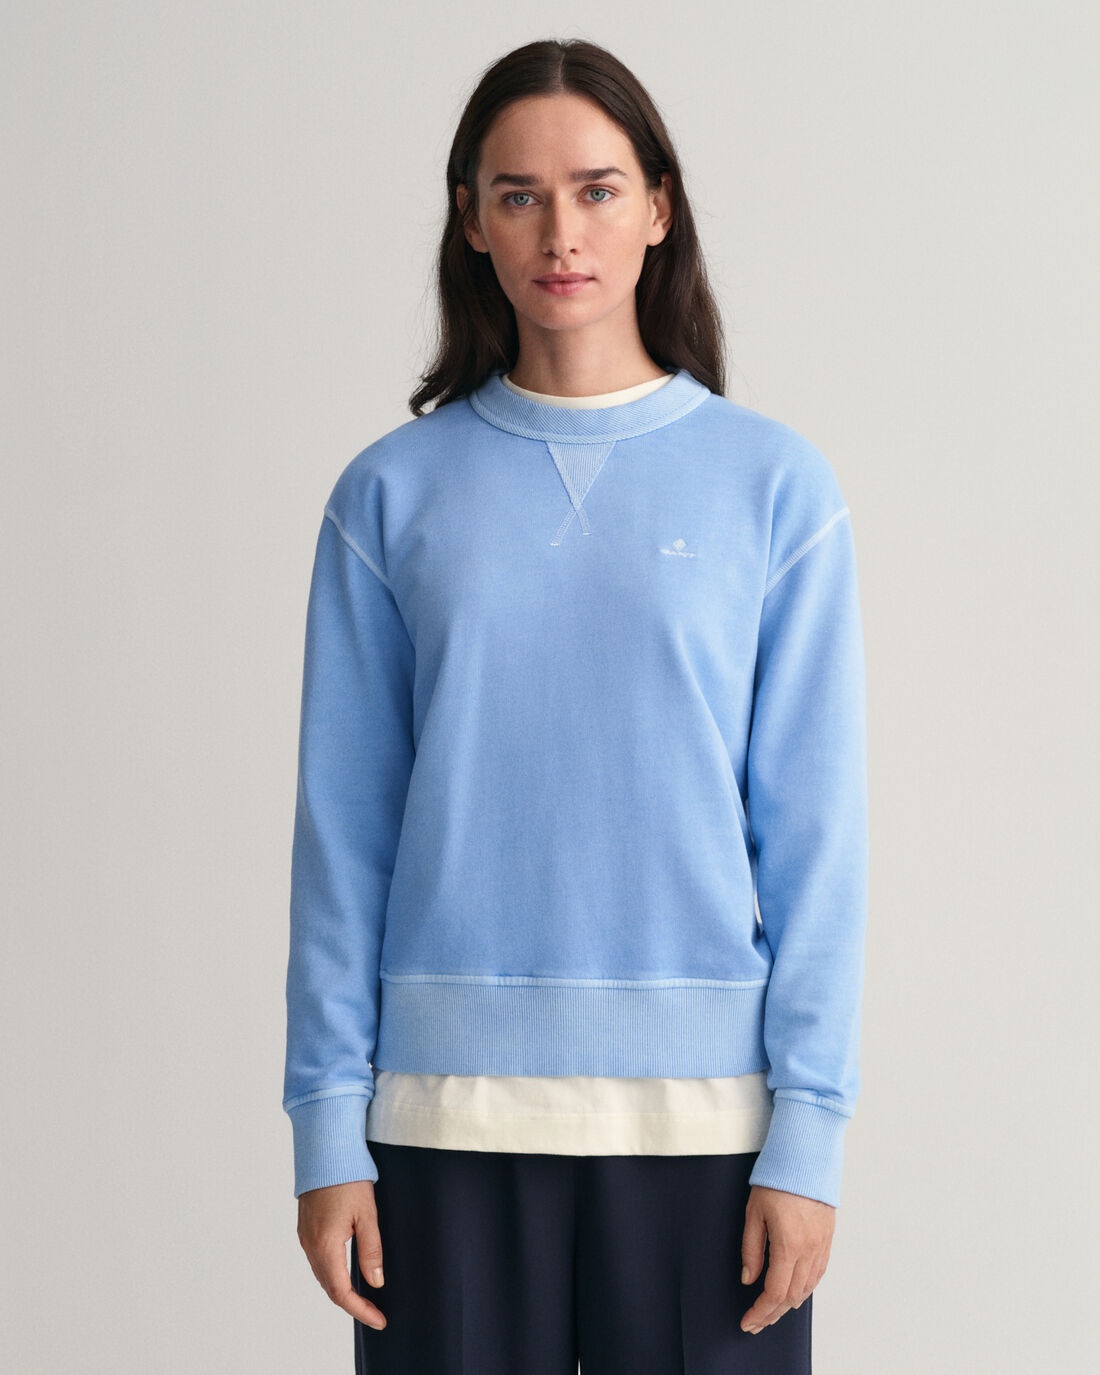 Gant - Sunfaded Sweatshirt